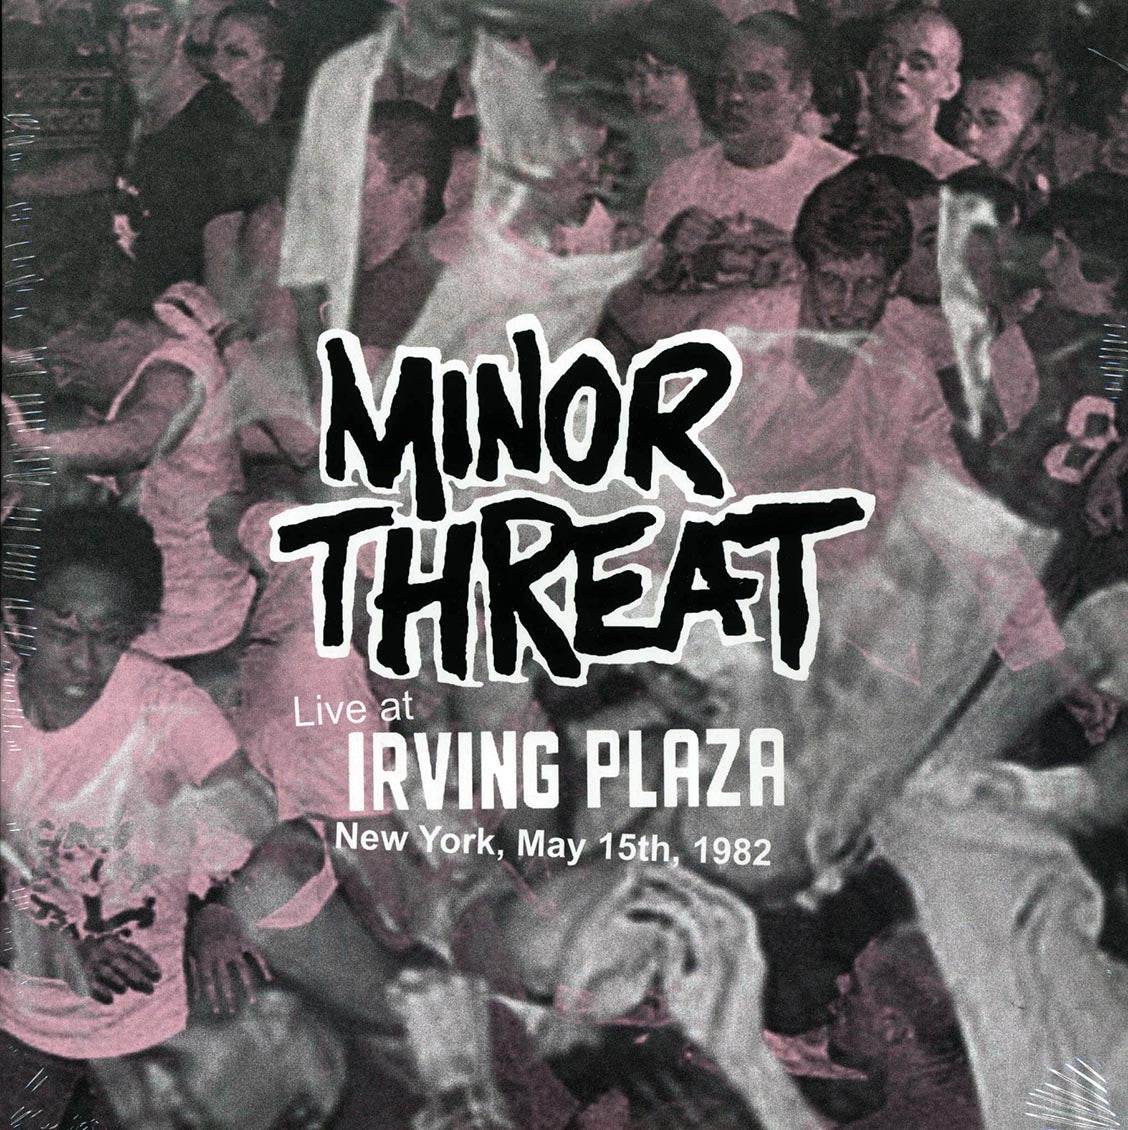 Minor Threat - Live At Irving Plaza New York, May 15th, 1982 - Vinyl LP